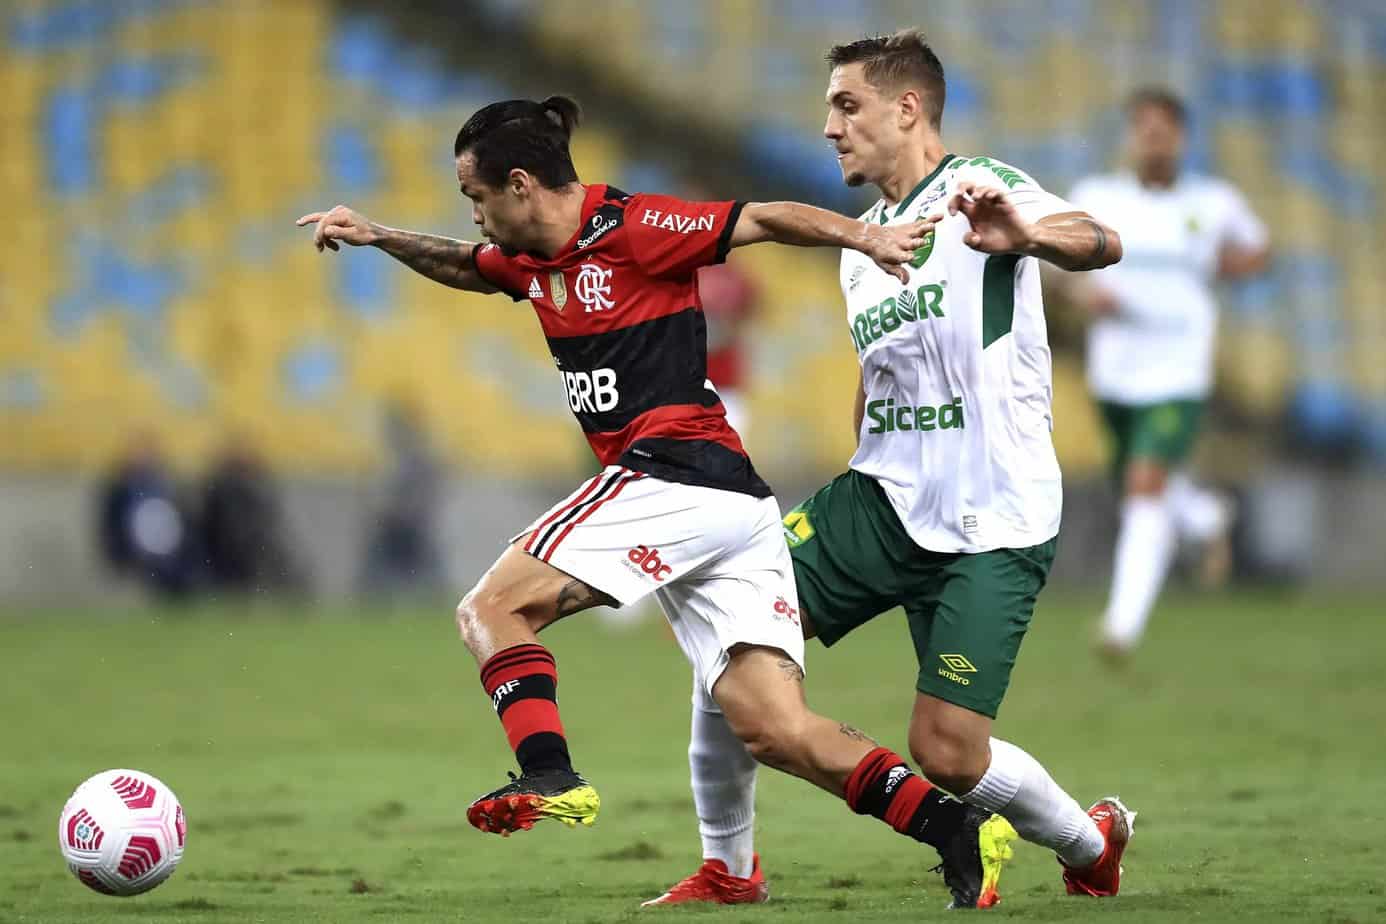 Cuiabá vs. Flamengo Betting Odds and Free Pick